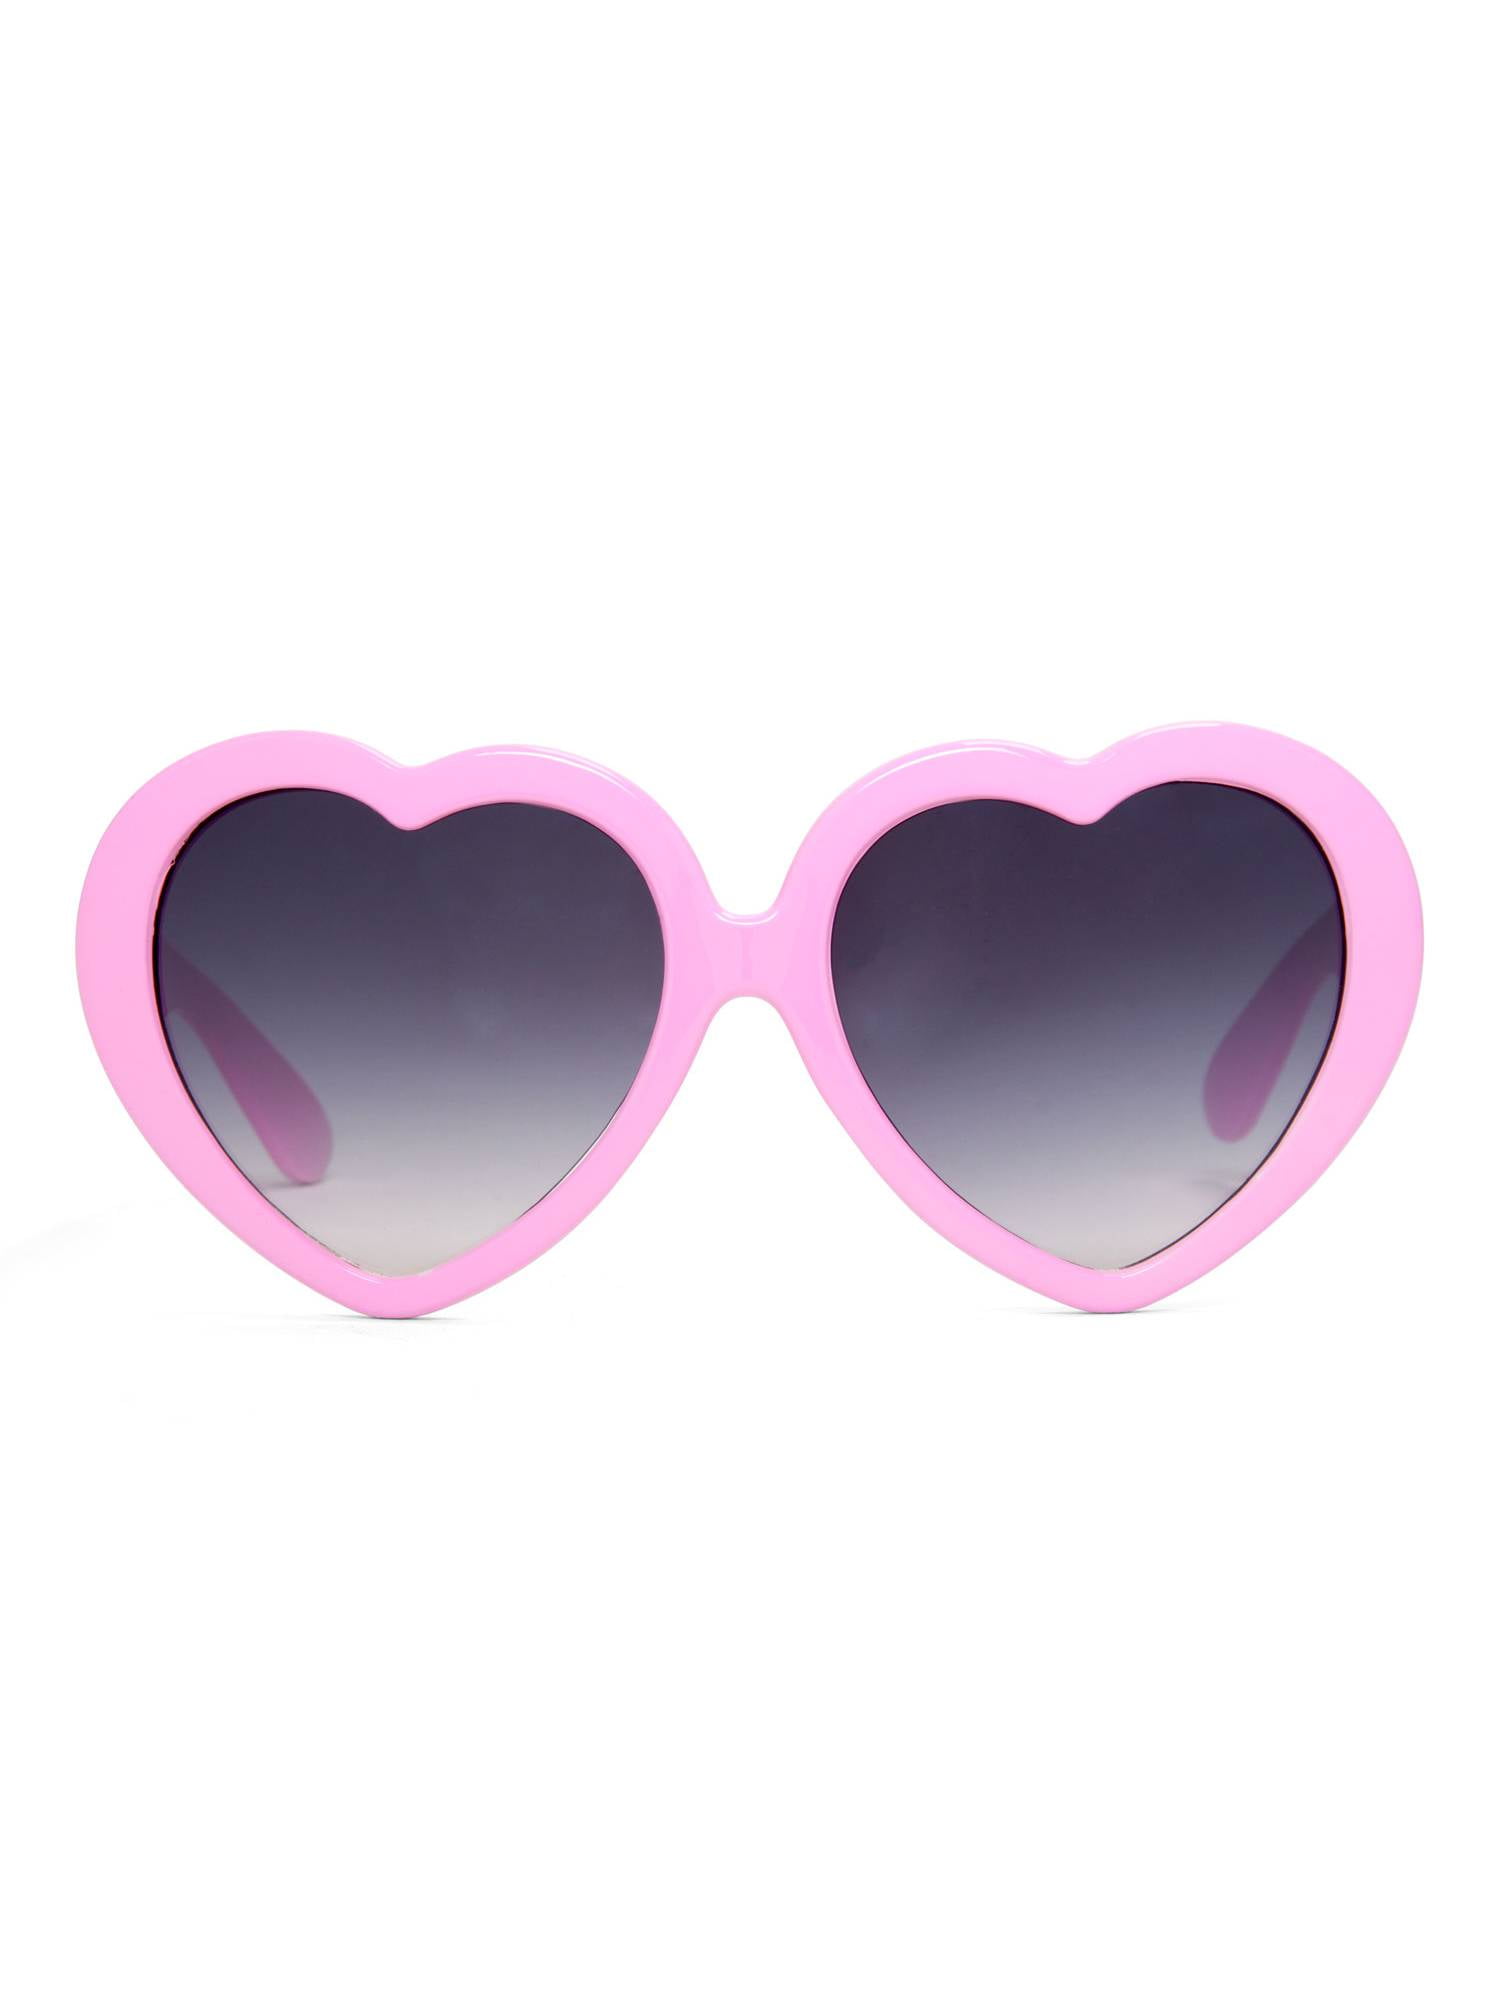 Gravity Shades Oversized Heart Shaped Sunglasses, Lt Pink - Walmart.com